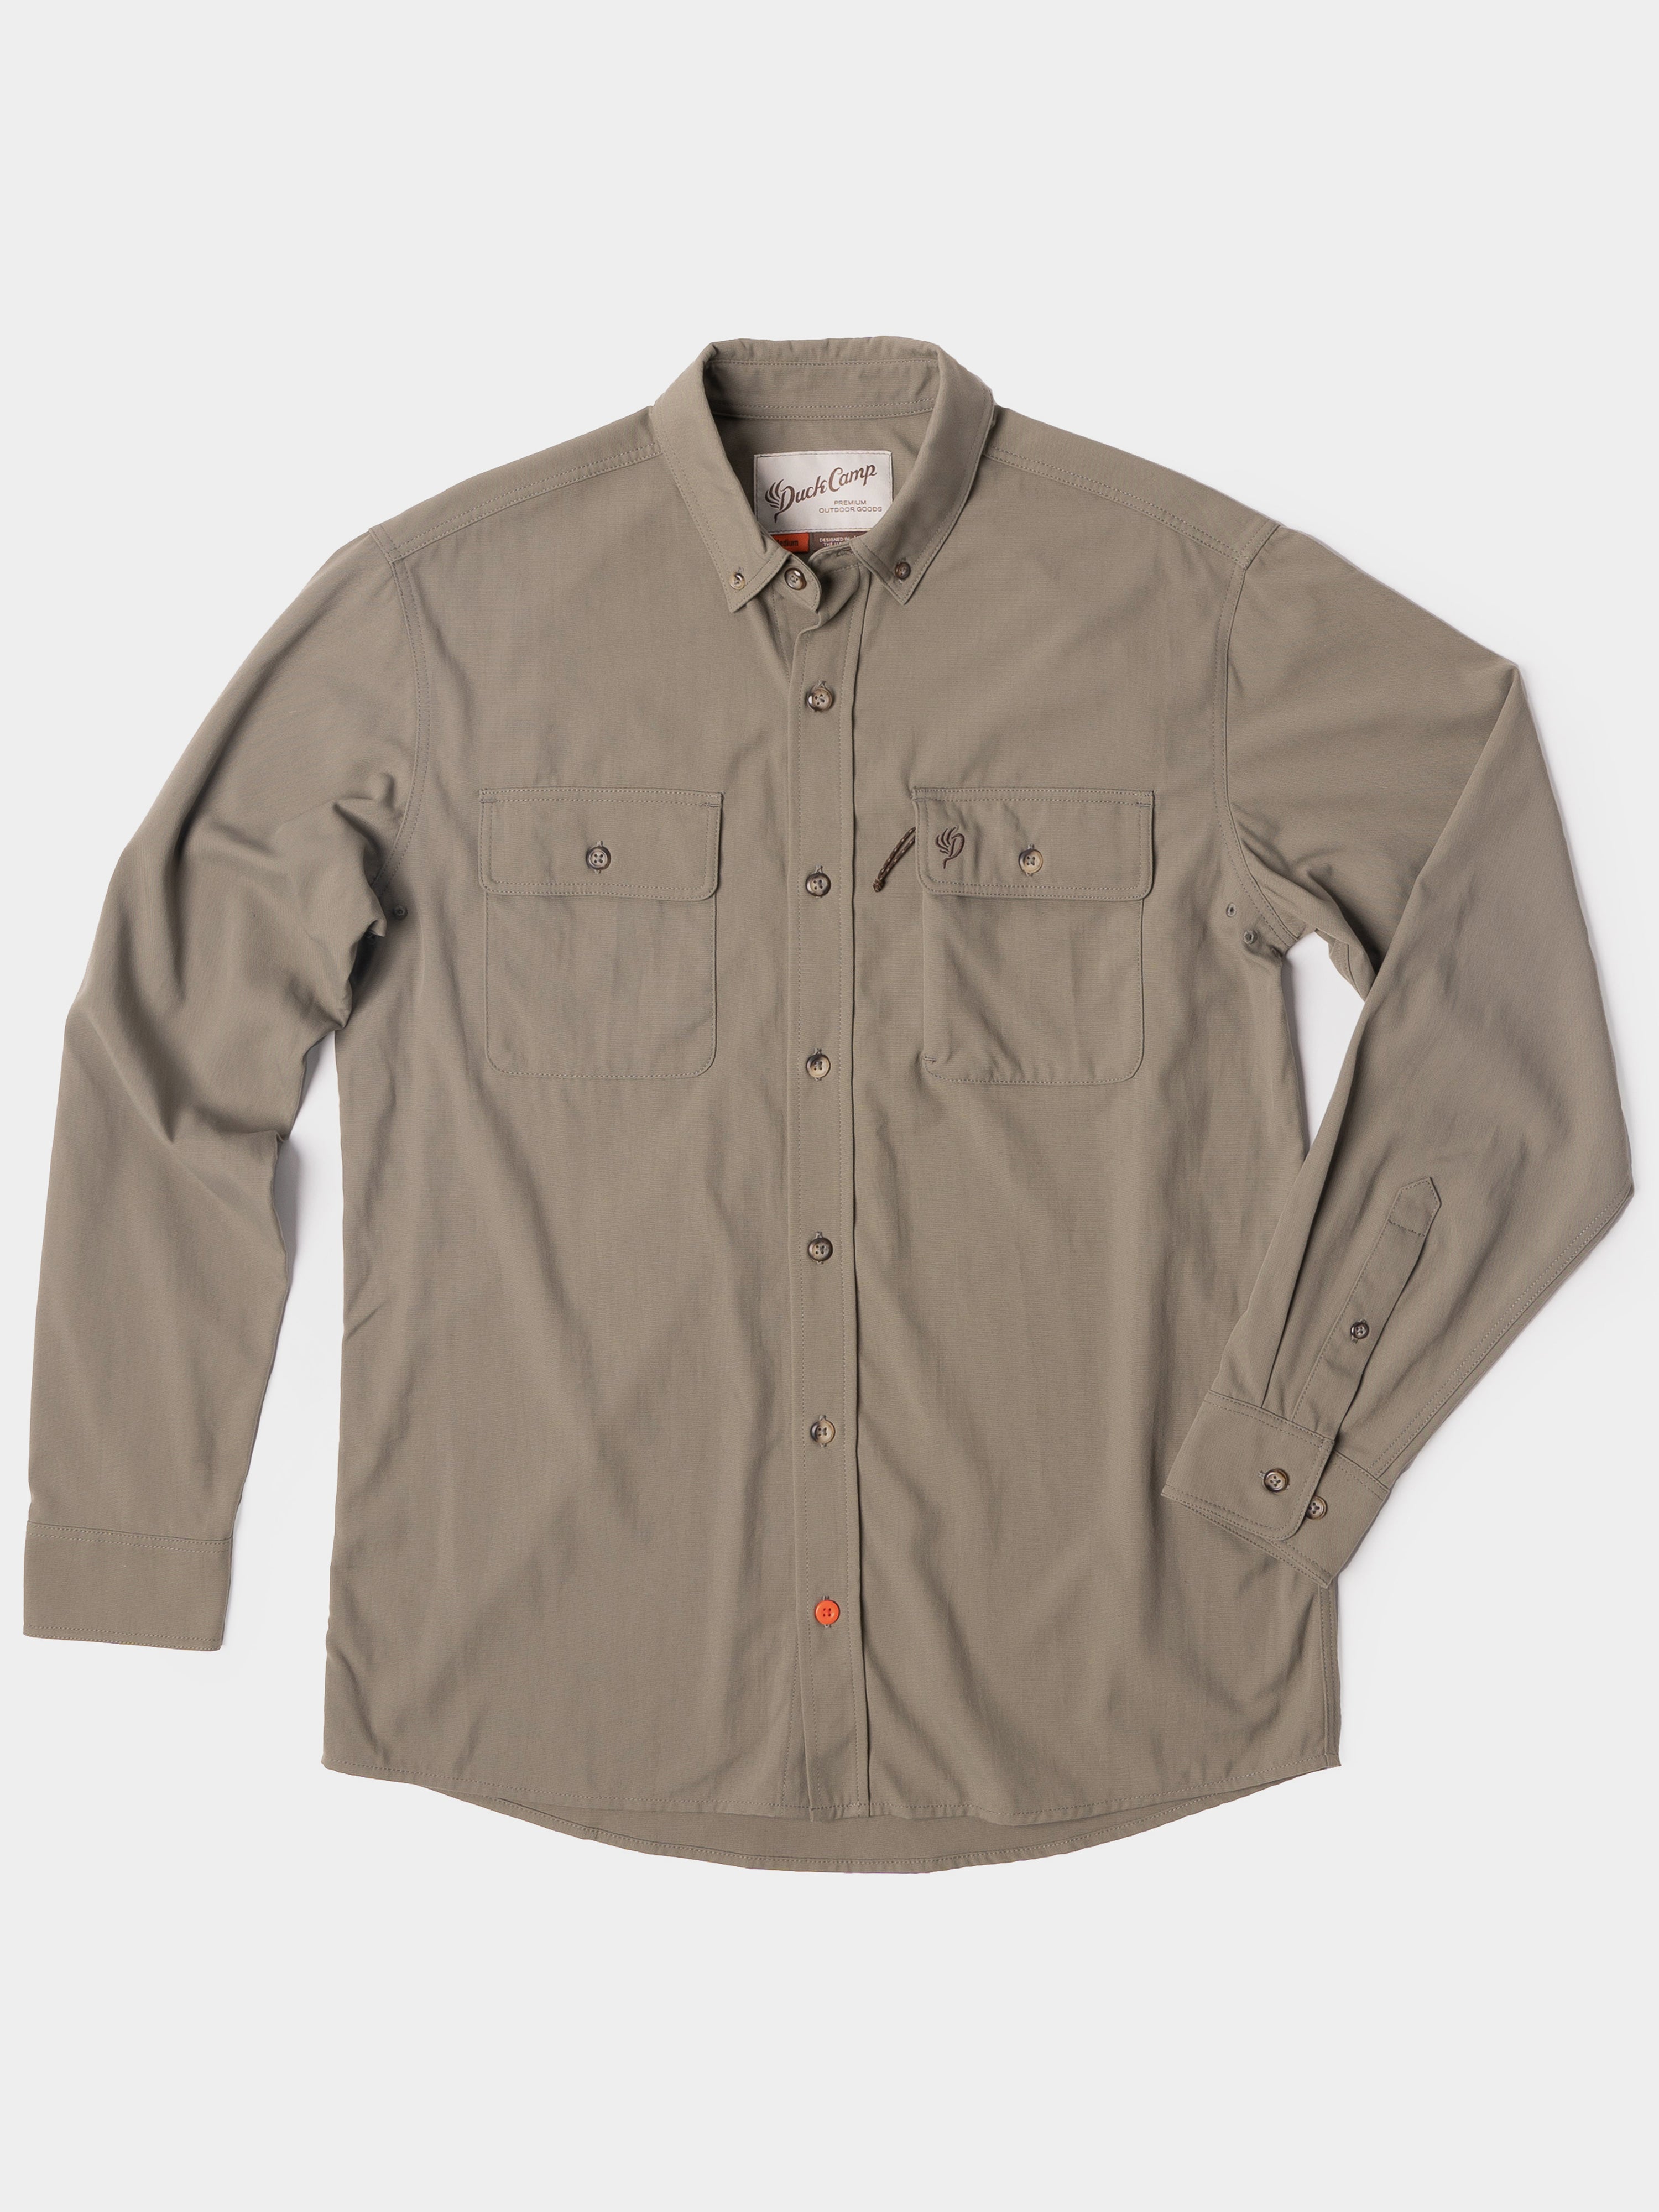 Duck Camp Midweight Hunting Shirt - Long Sleeve - Moss, L